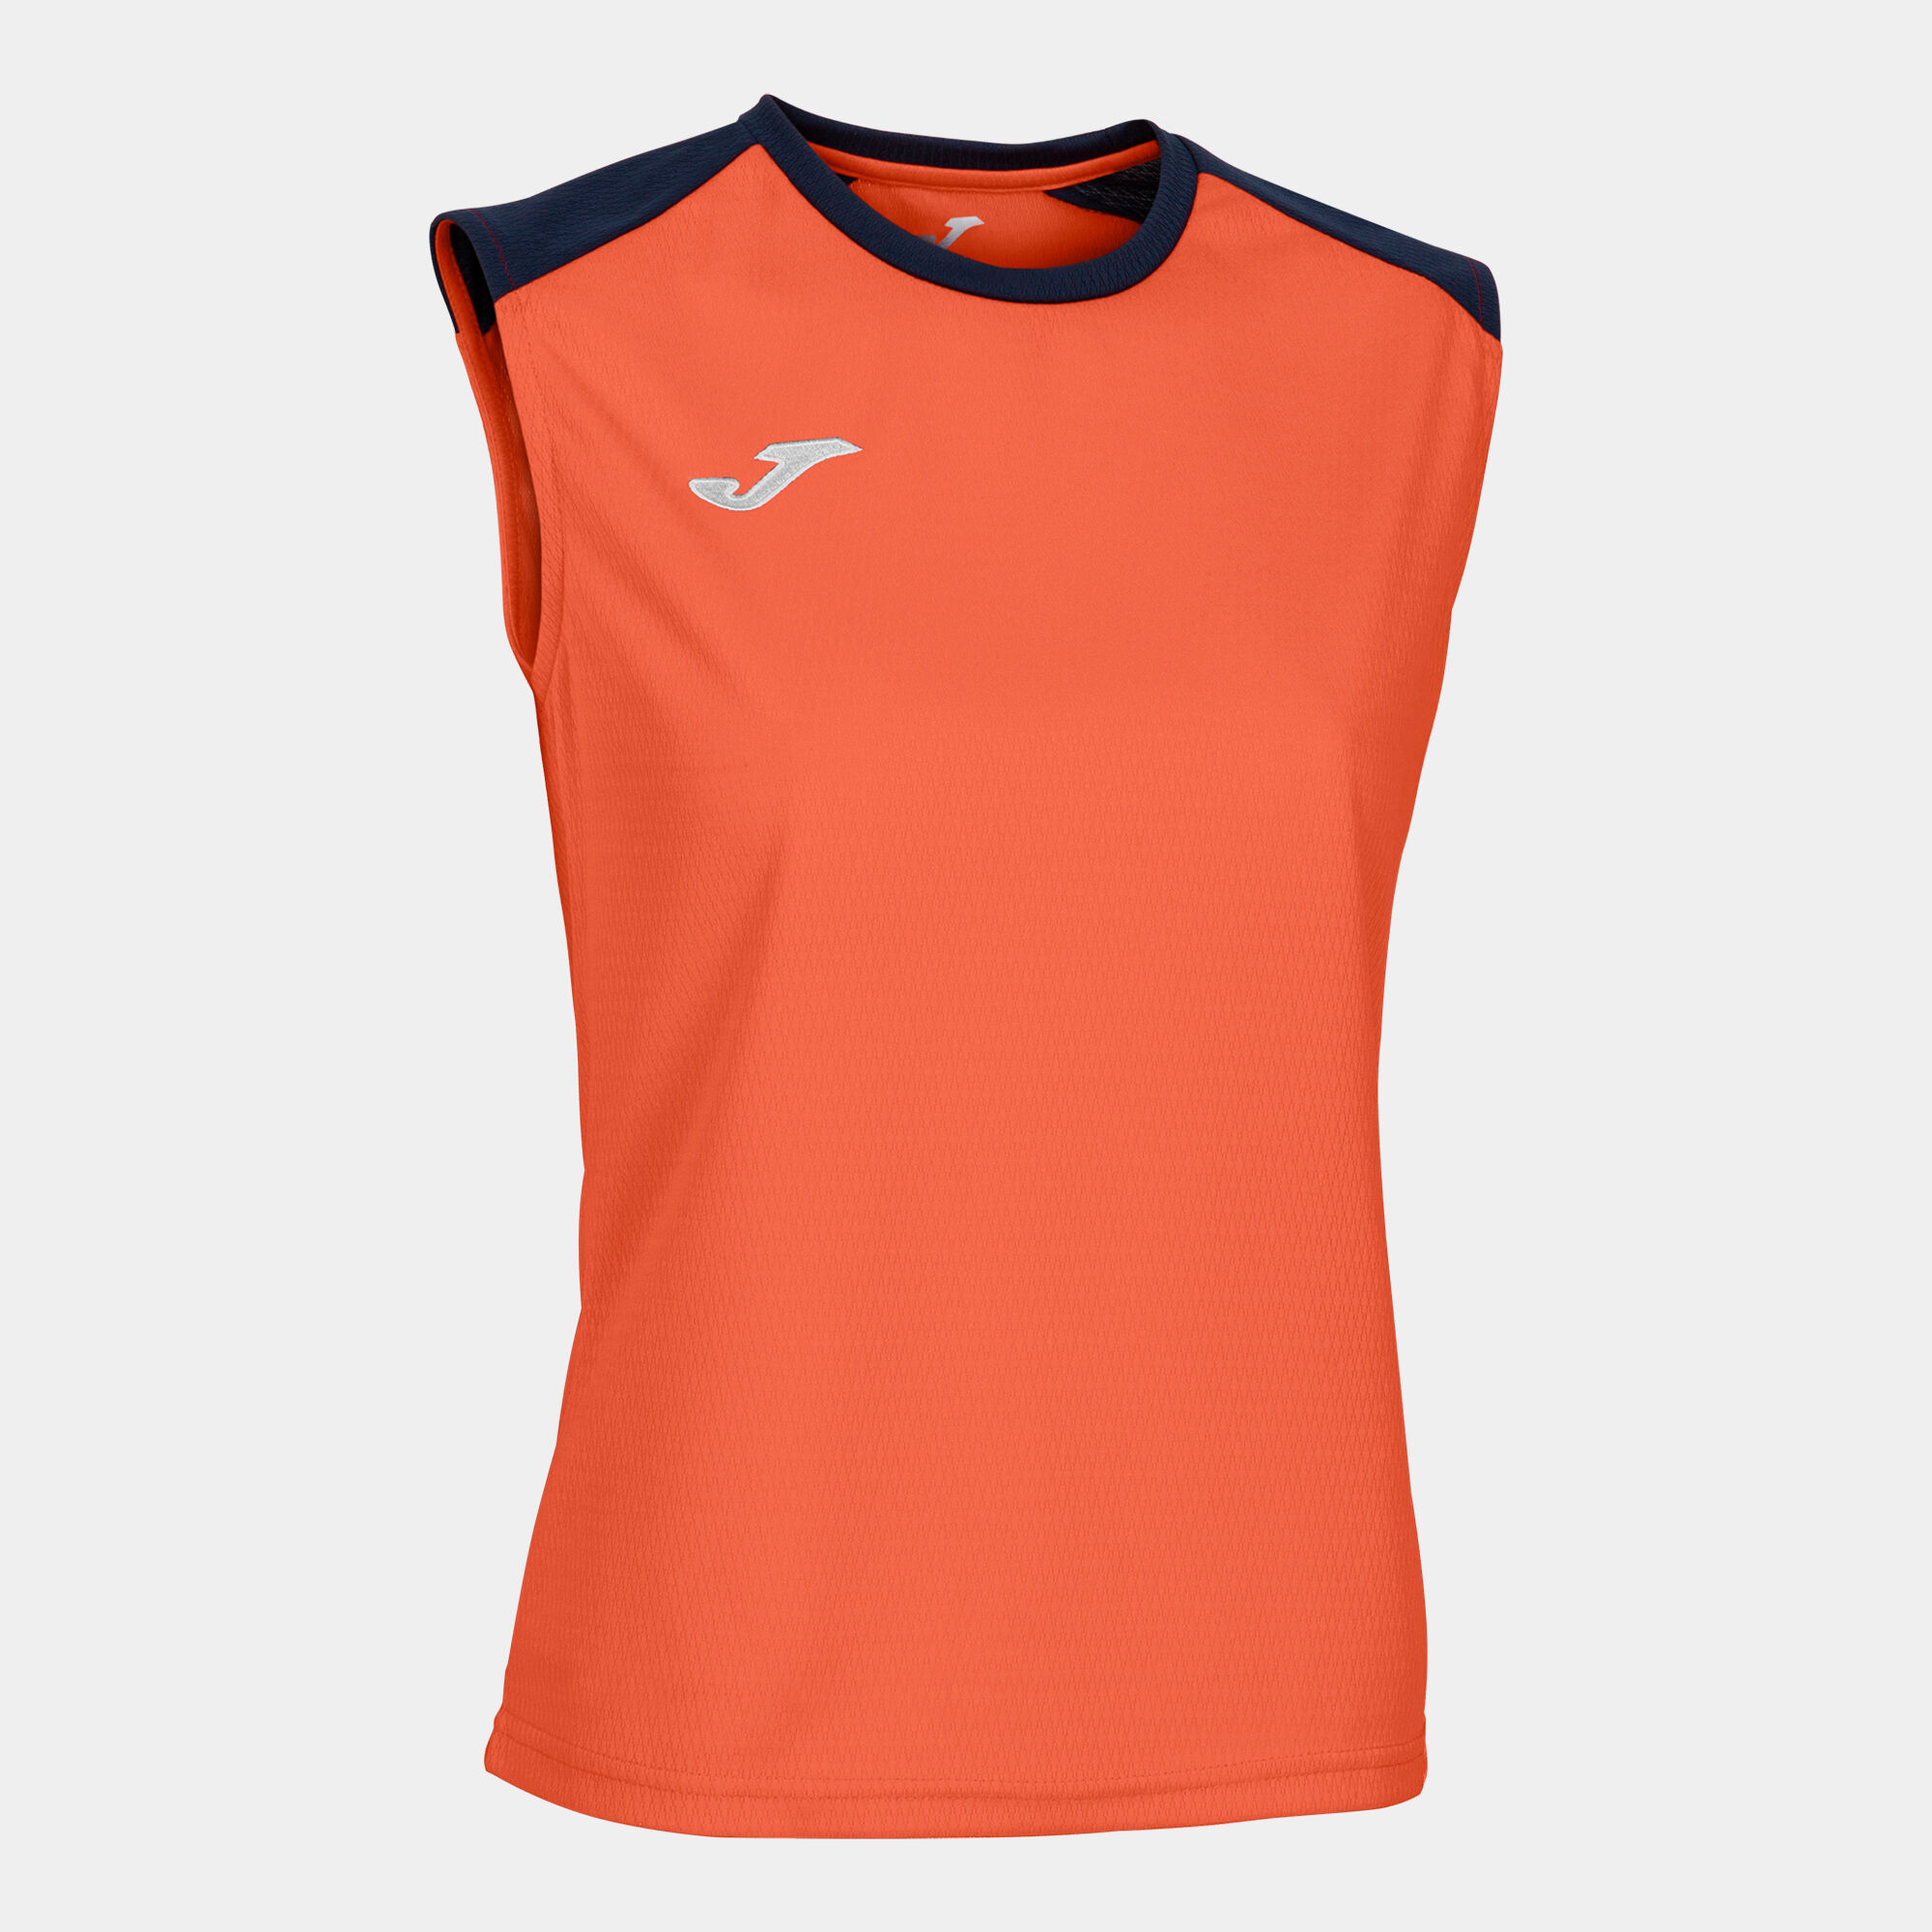 Camiseta tirantes mujer Eco Championship naranja marino |